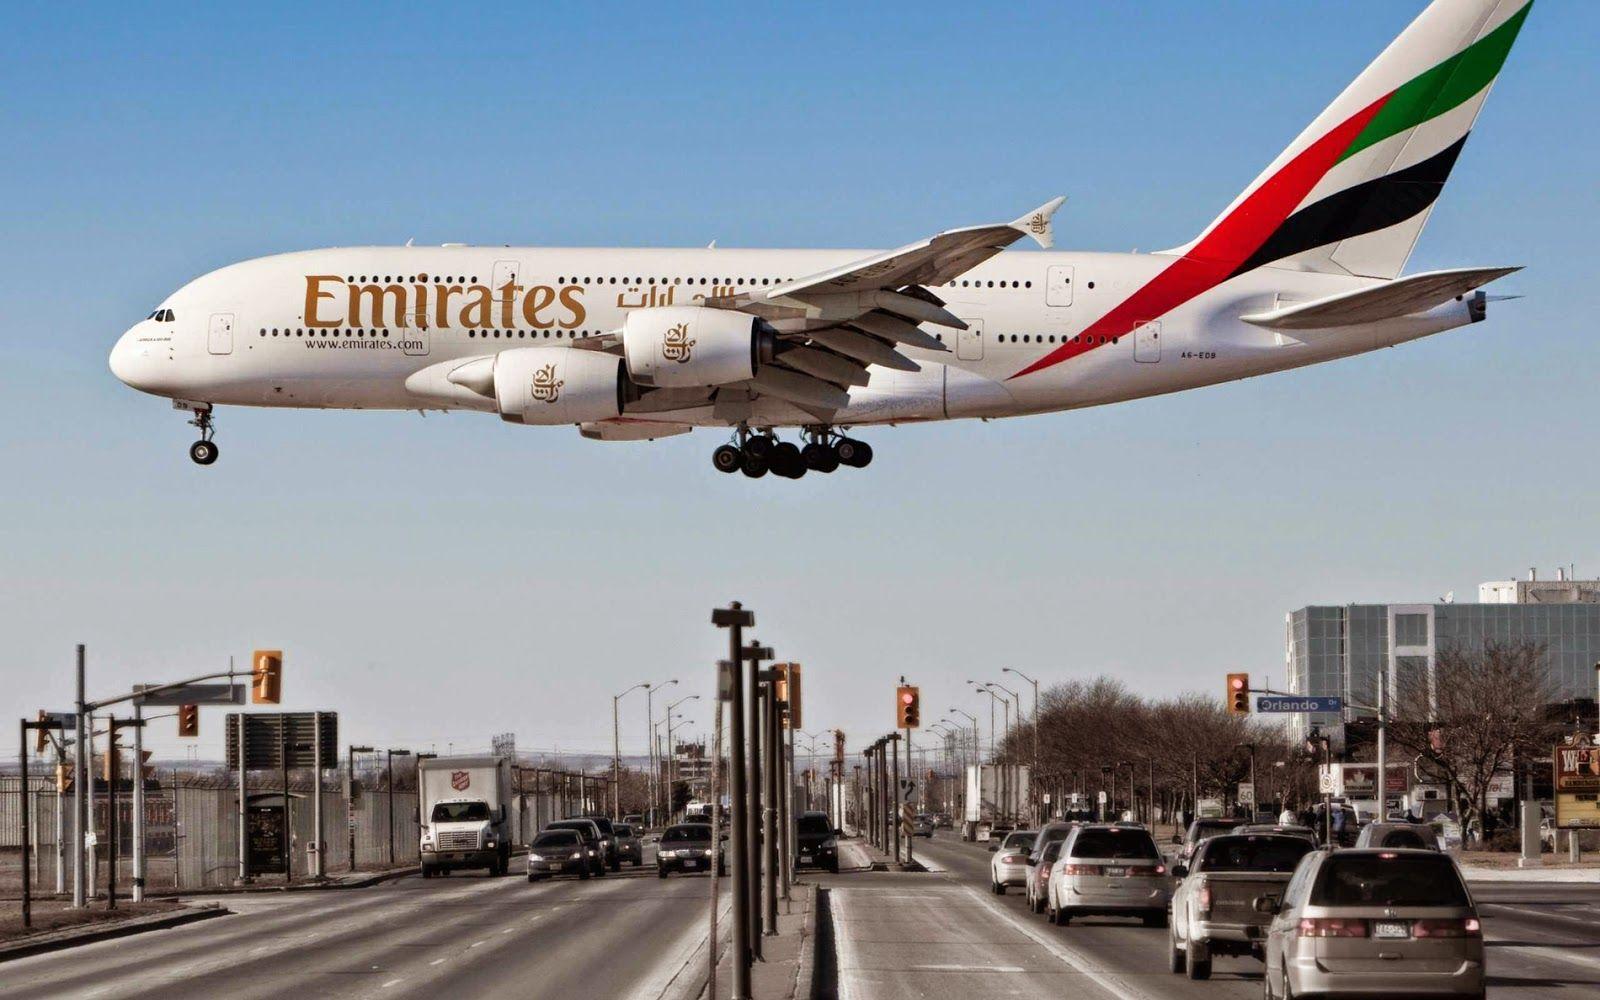 Best Wallpaper: Emirates Airline New 2014 Wallpaper free download